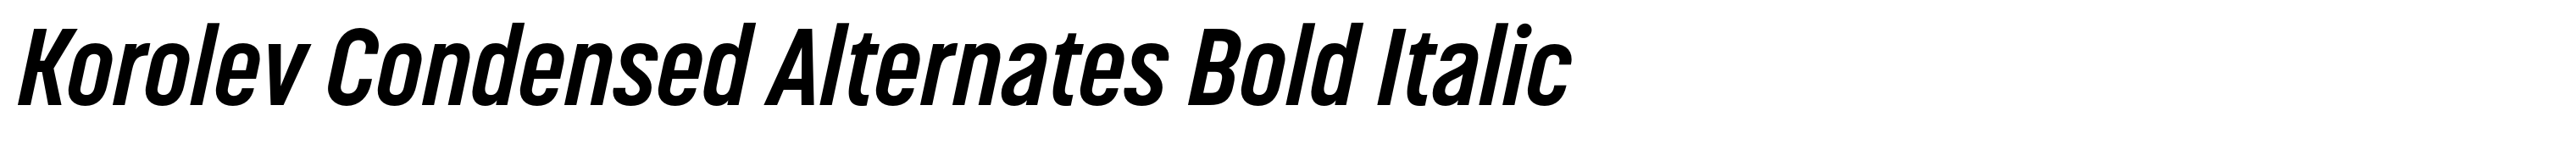 Korolev Condensed Alternates Bold Italic